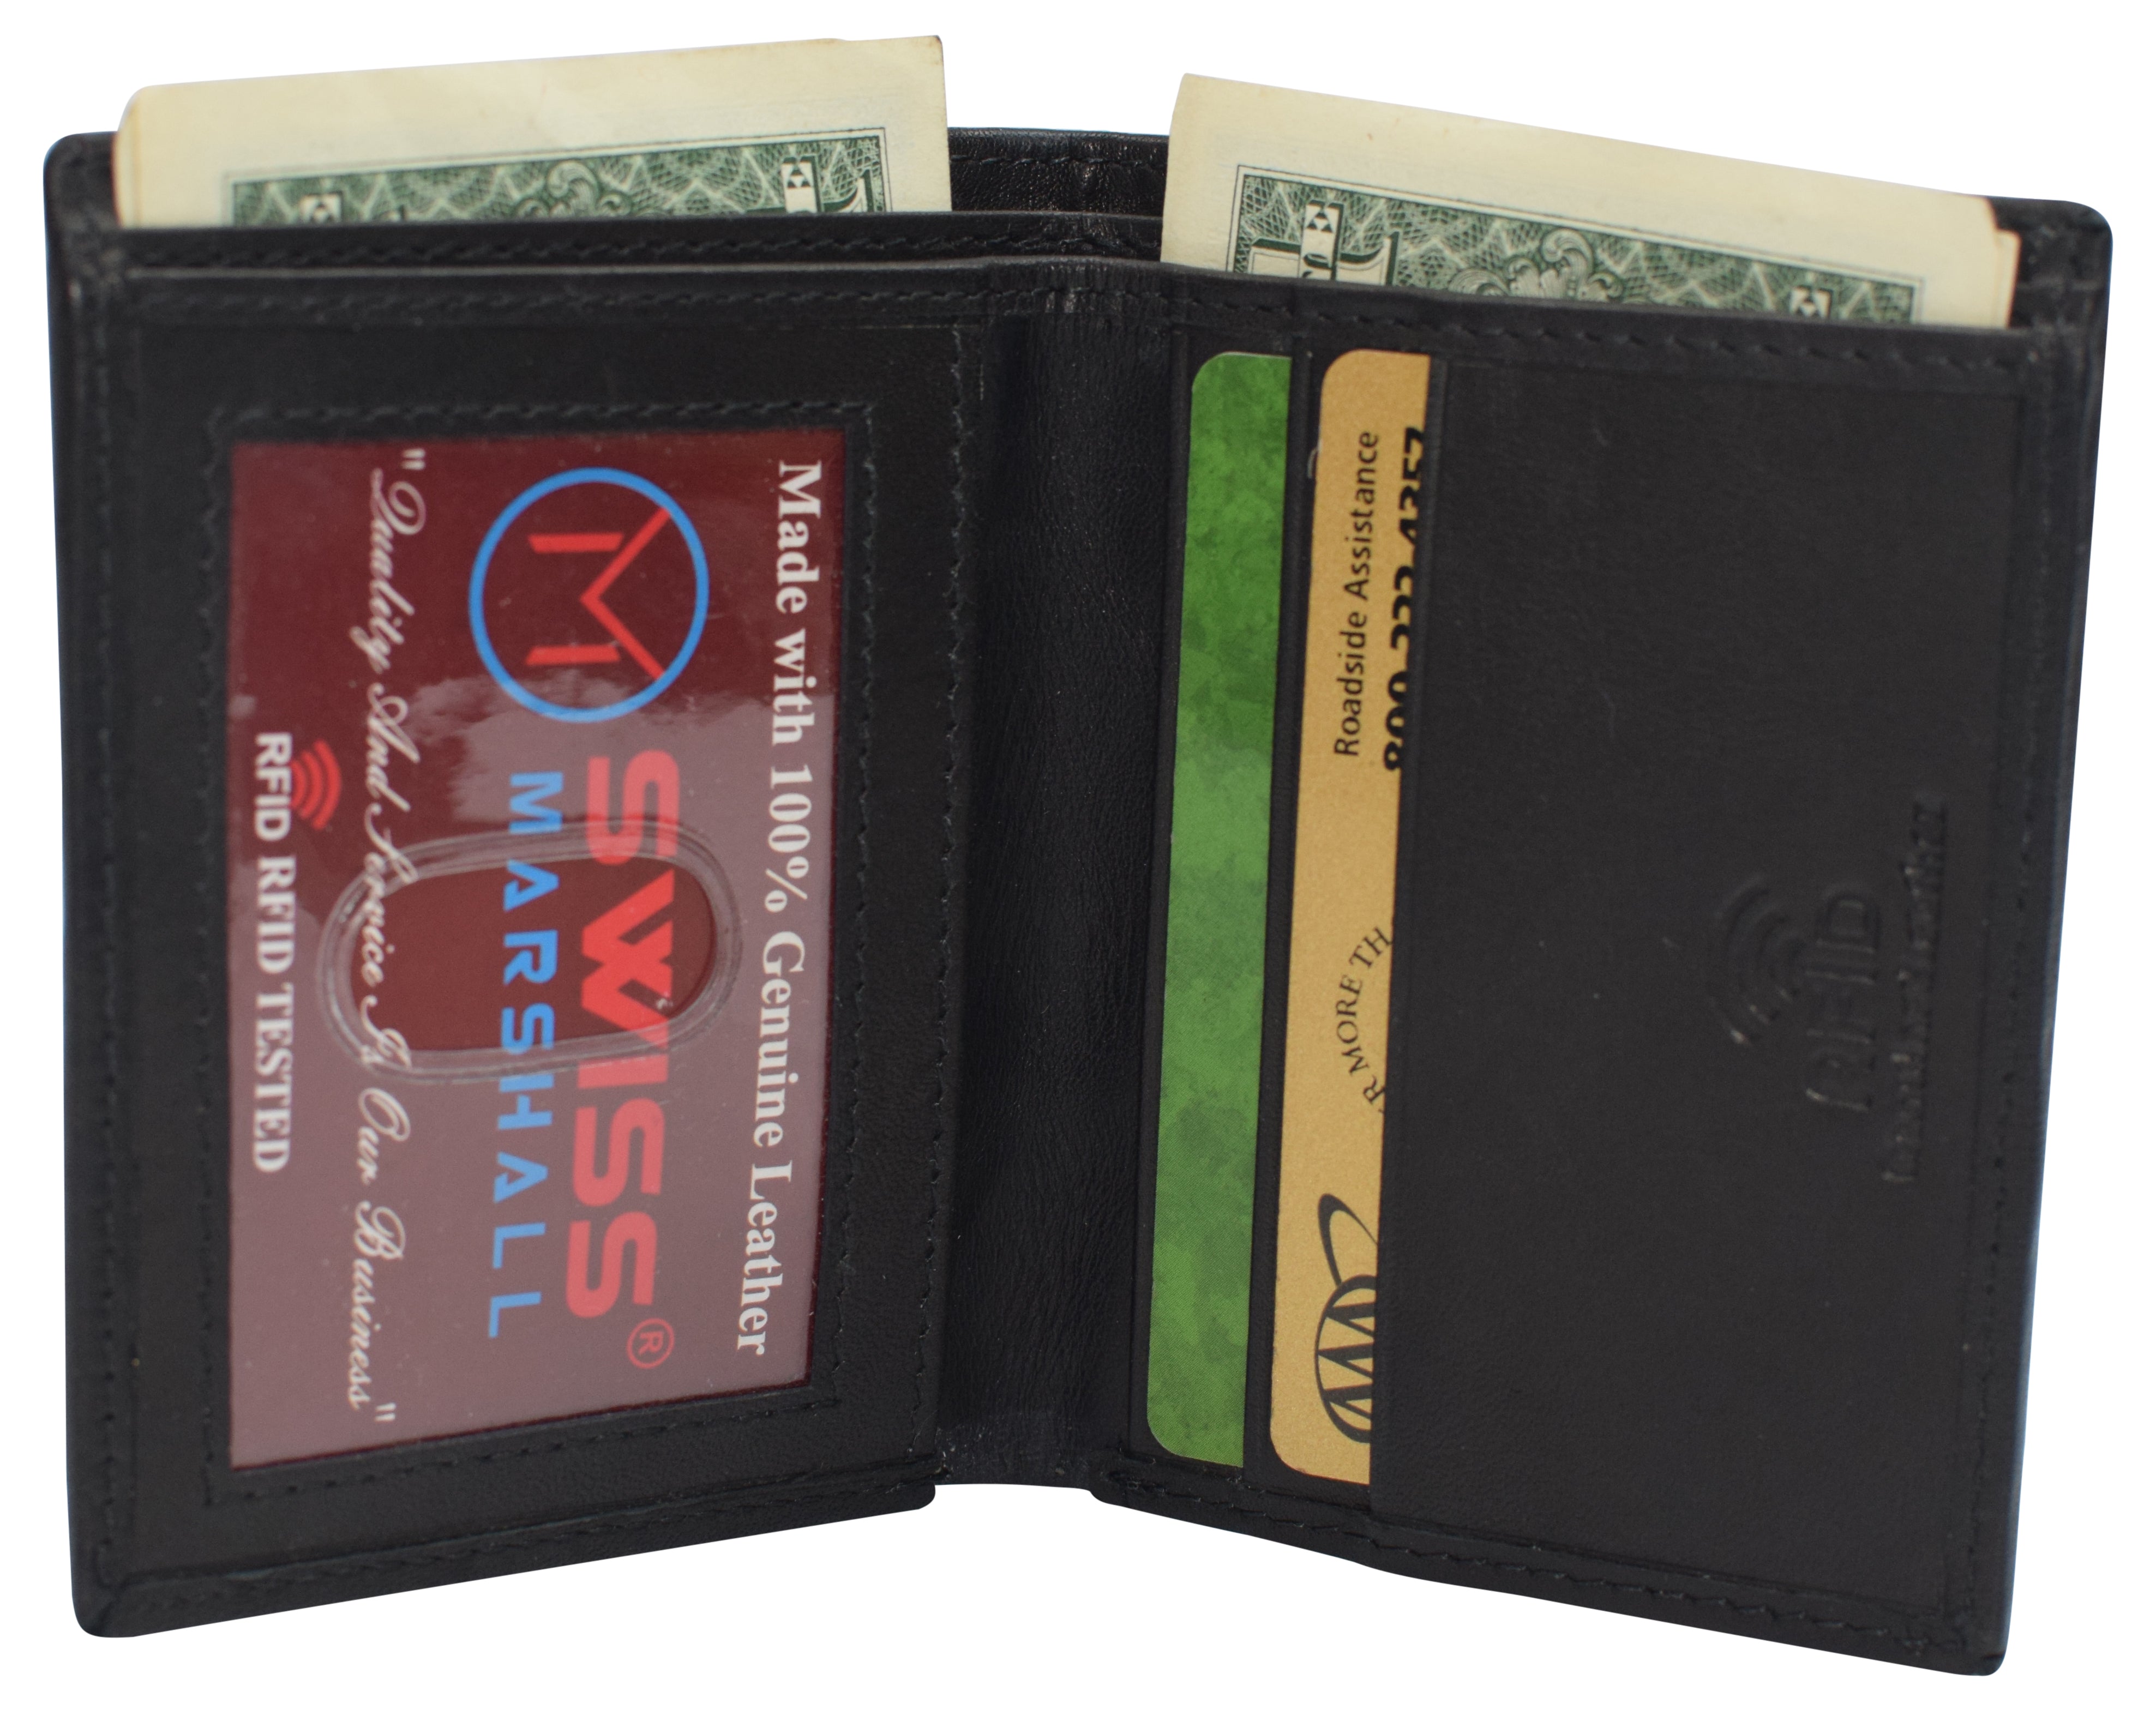 Swiss Marshall RFID Blocking Bifold Leather Wallet For Men & Women